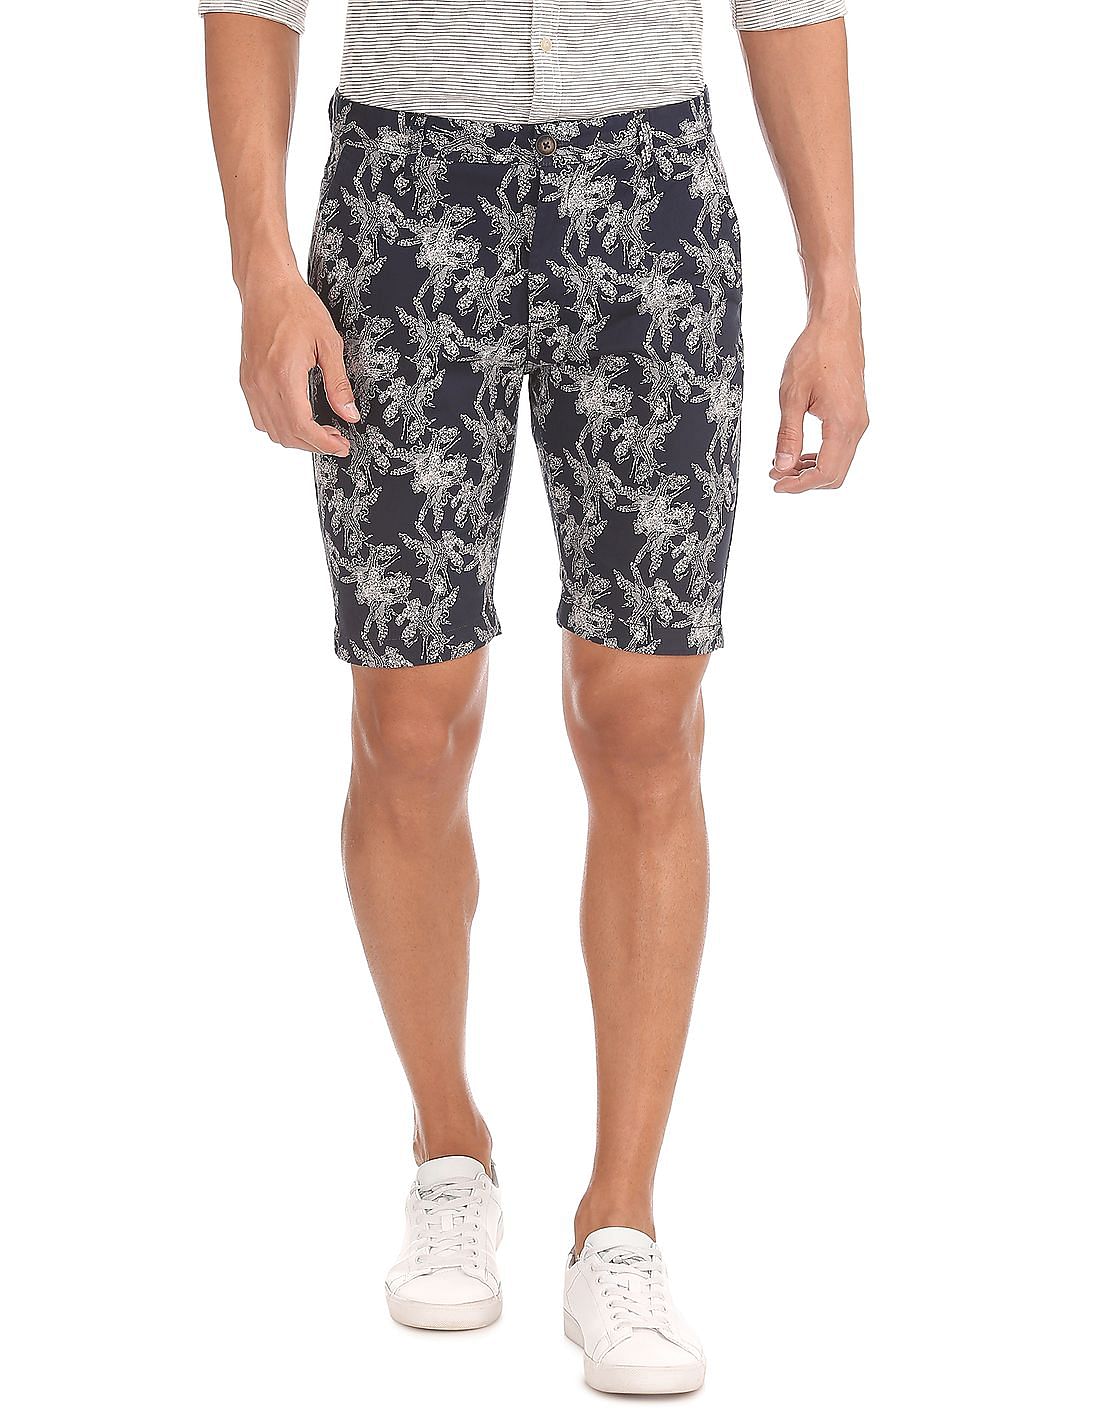 Buy Ed Hardy Printed Slim Fit Shorts - NNNOW.com